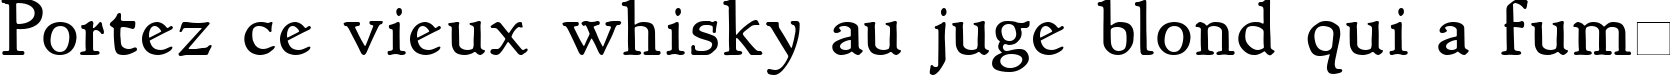 Пример написания шрифтом NewStyle текста на французском